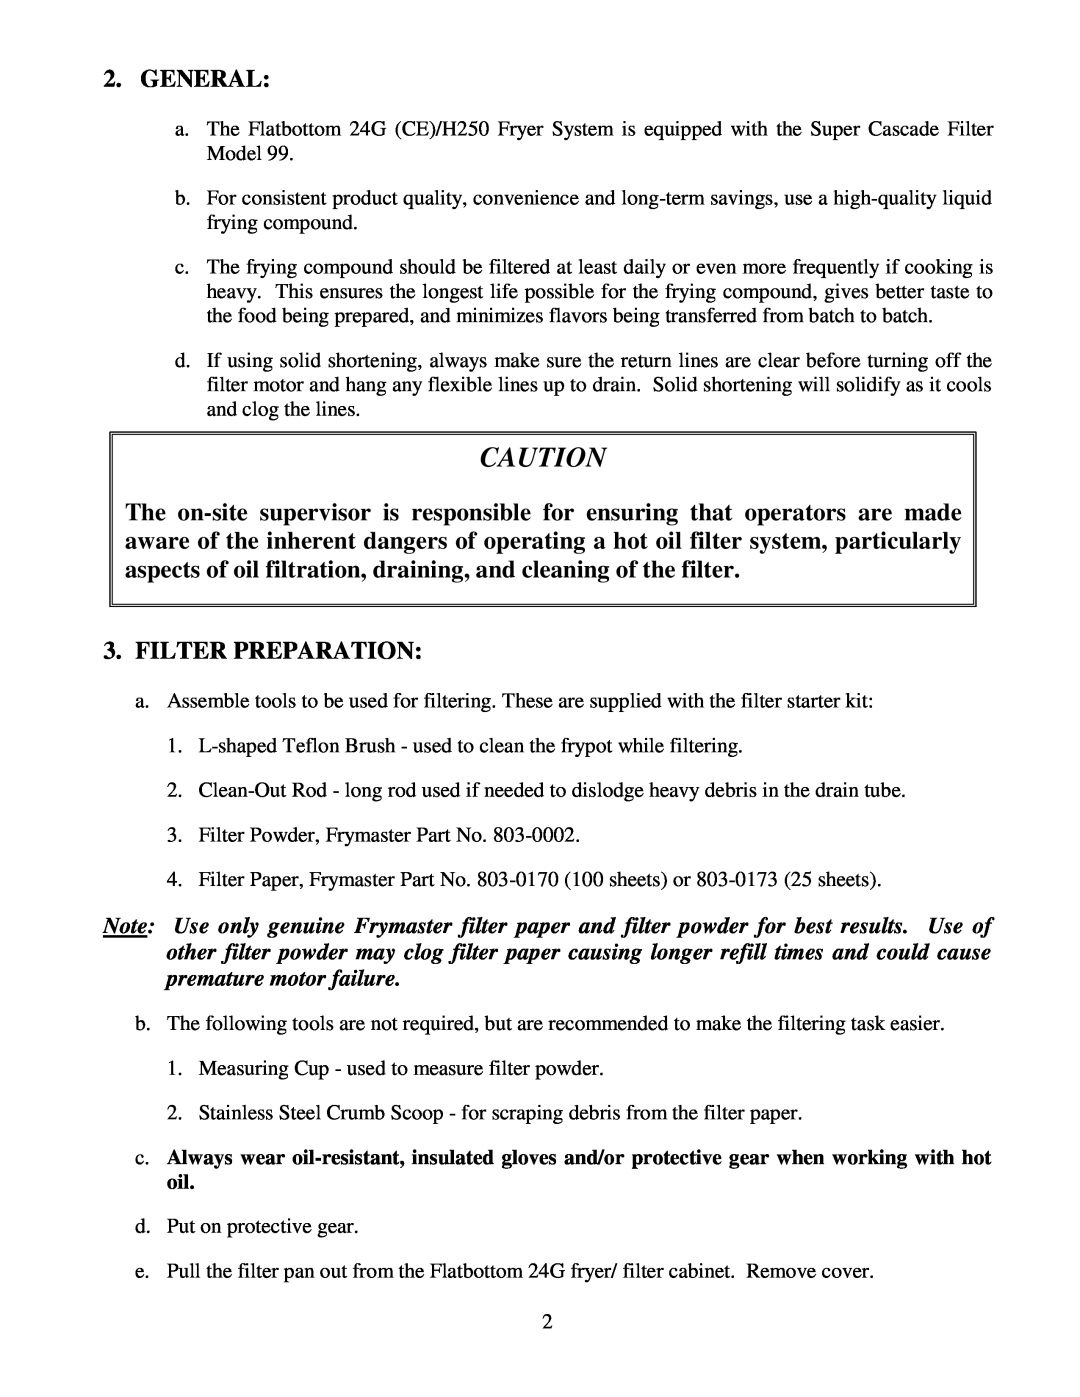 Frymaster CE operation manual General, Filter Preparation 